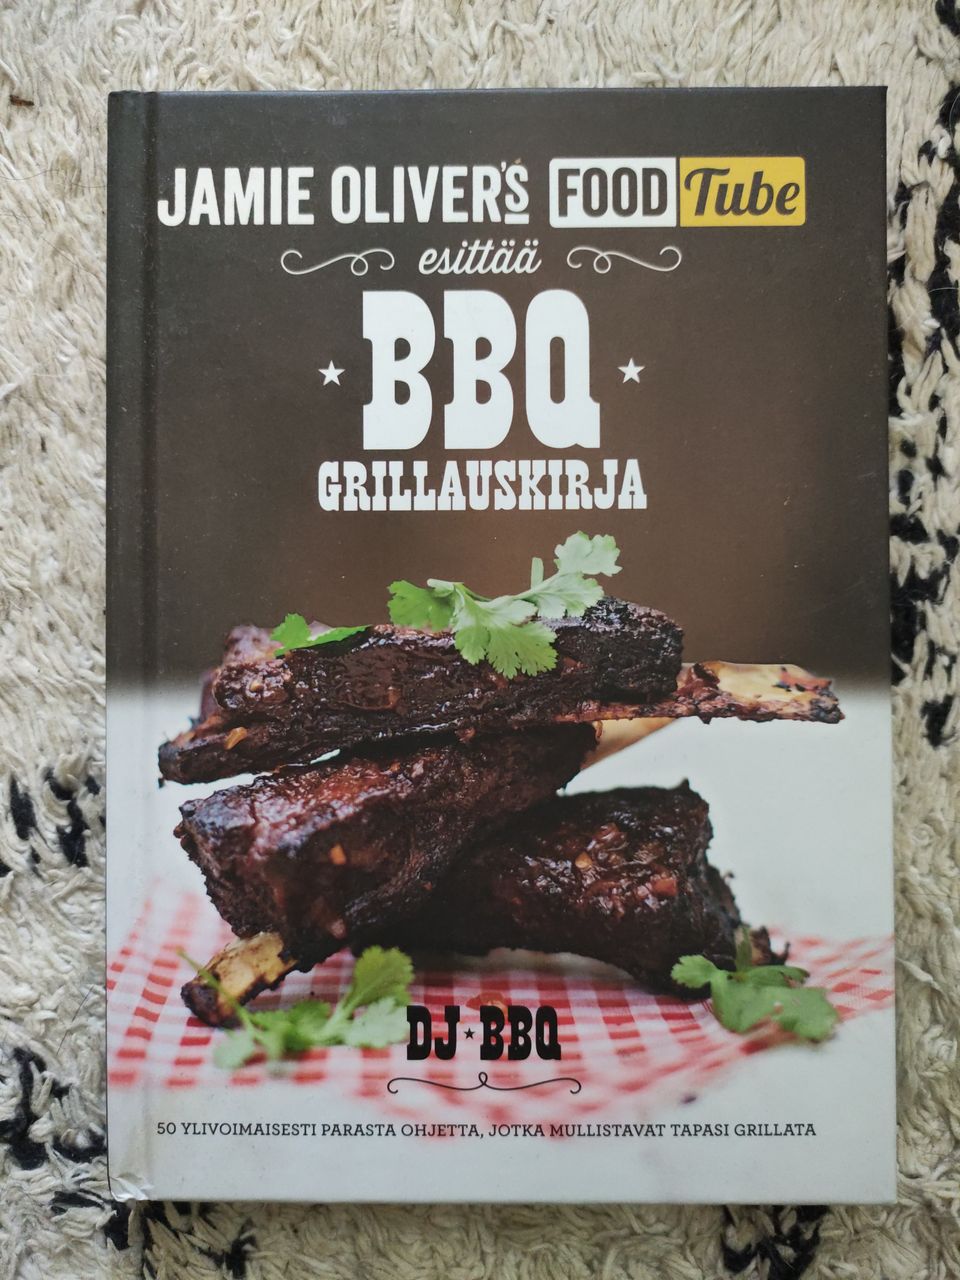 Jamie Oliver's FoodTube BBQ grillauskirja